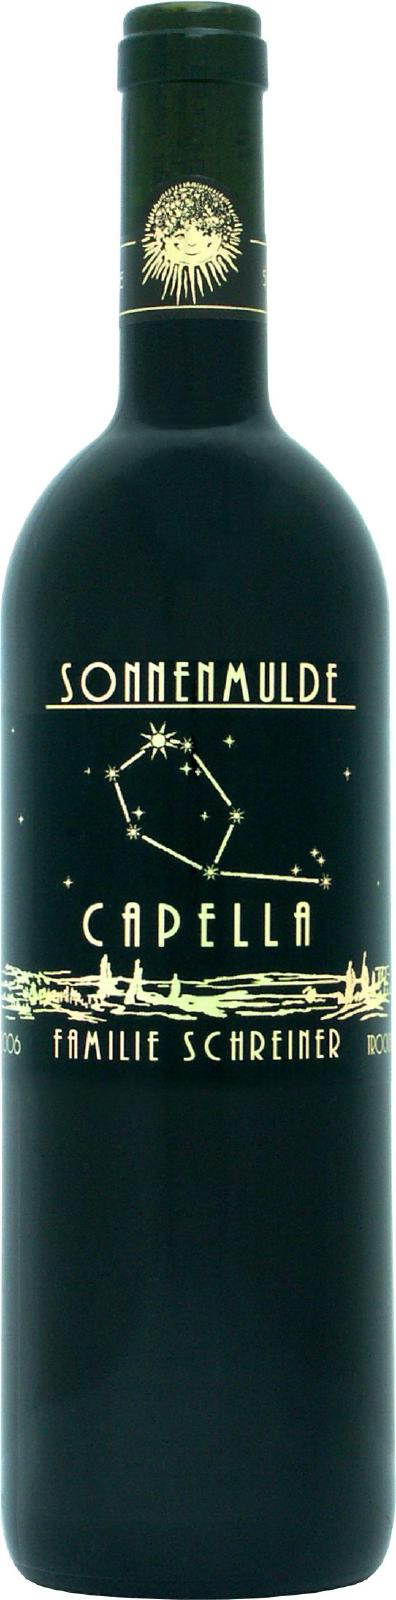 A bottle of Capella